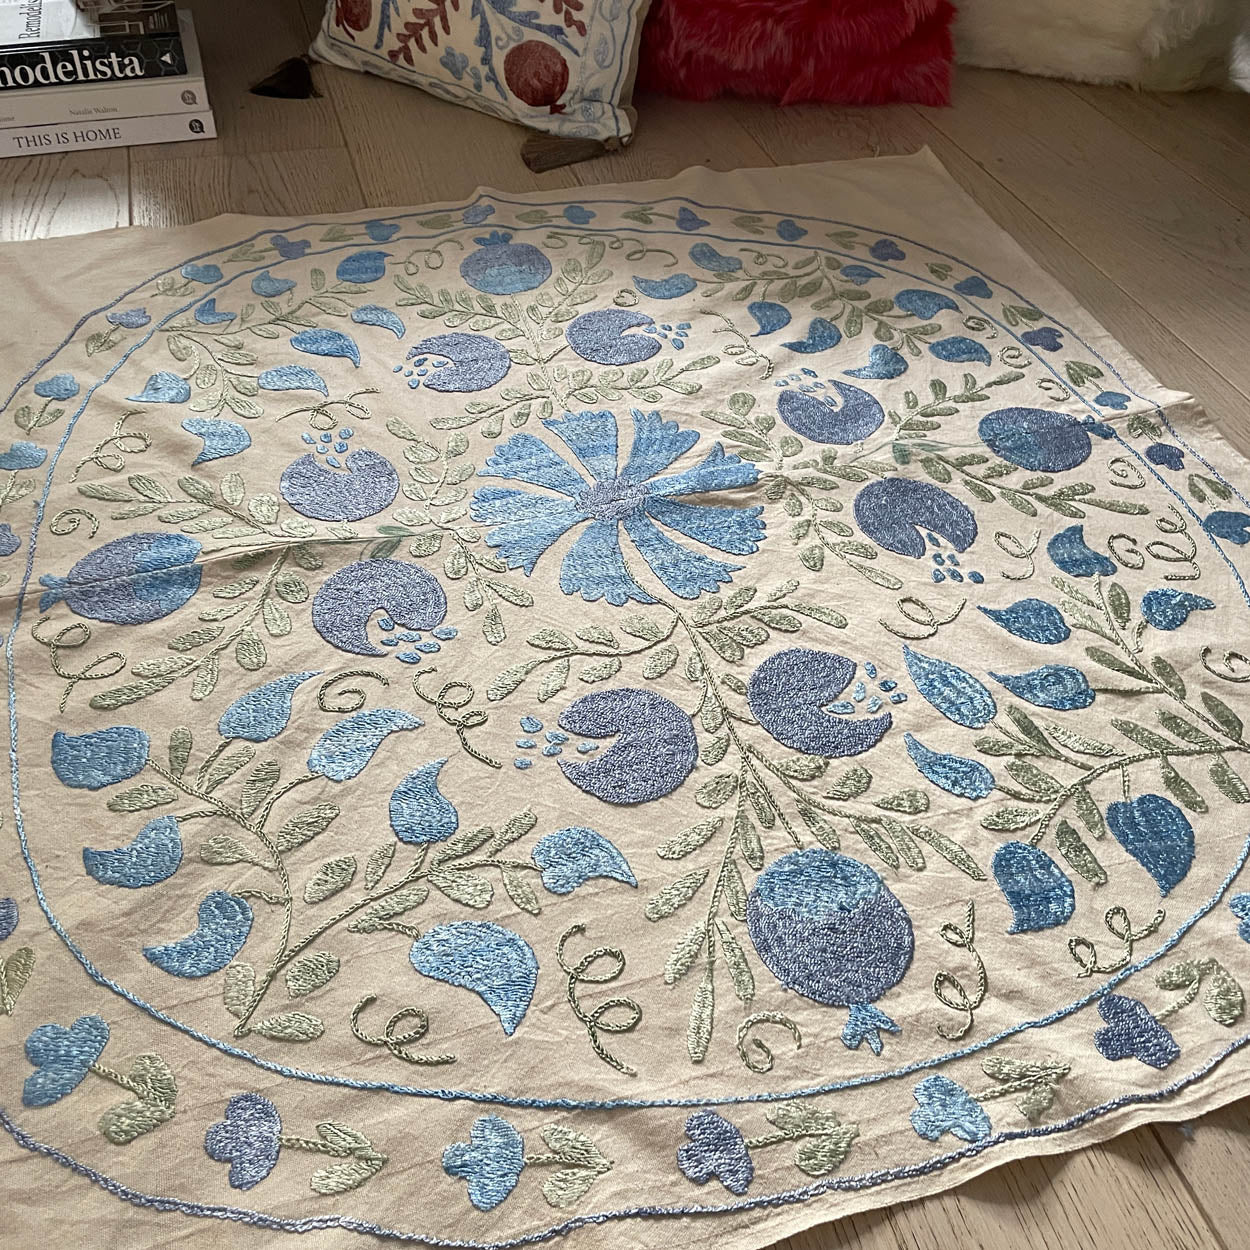 Uzbeki Suzani Hand Embroidered Textile Wall Hanging | Home Décor | Runner | 95cm x 99cm SUZ220518018 - Wildash London